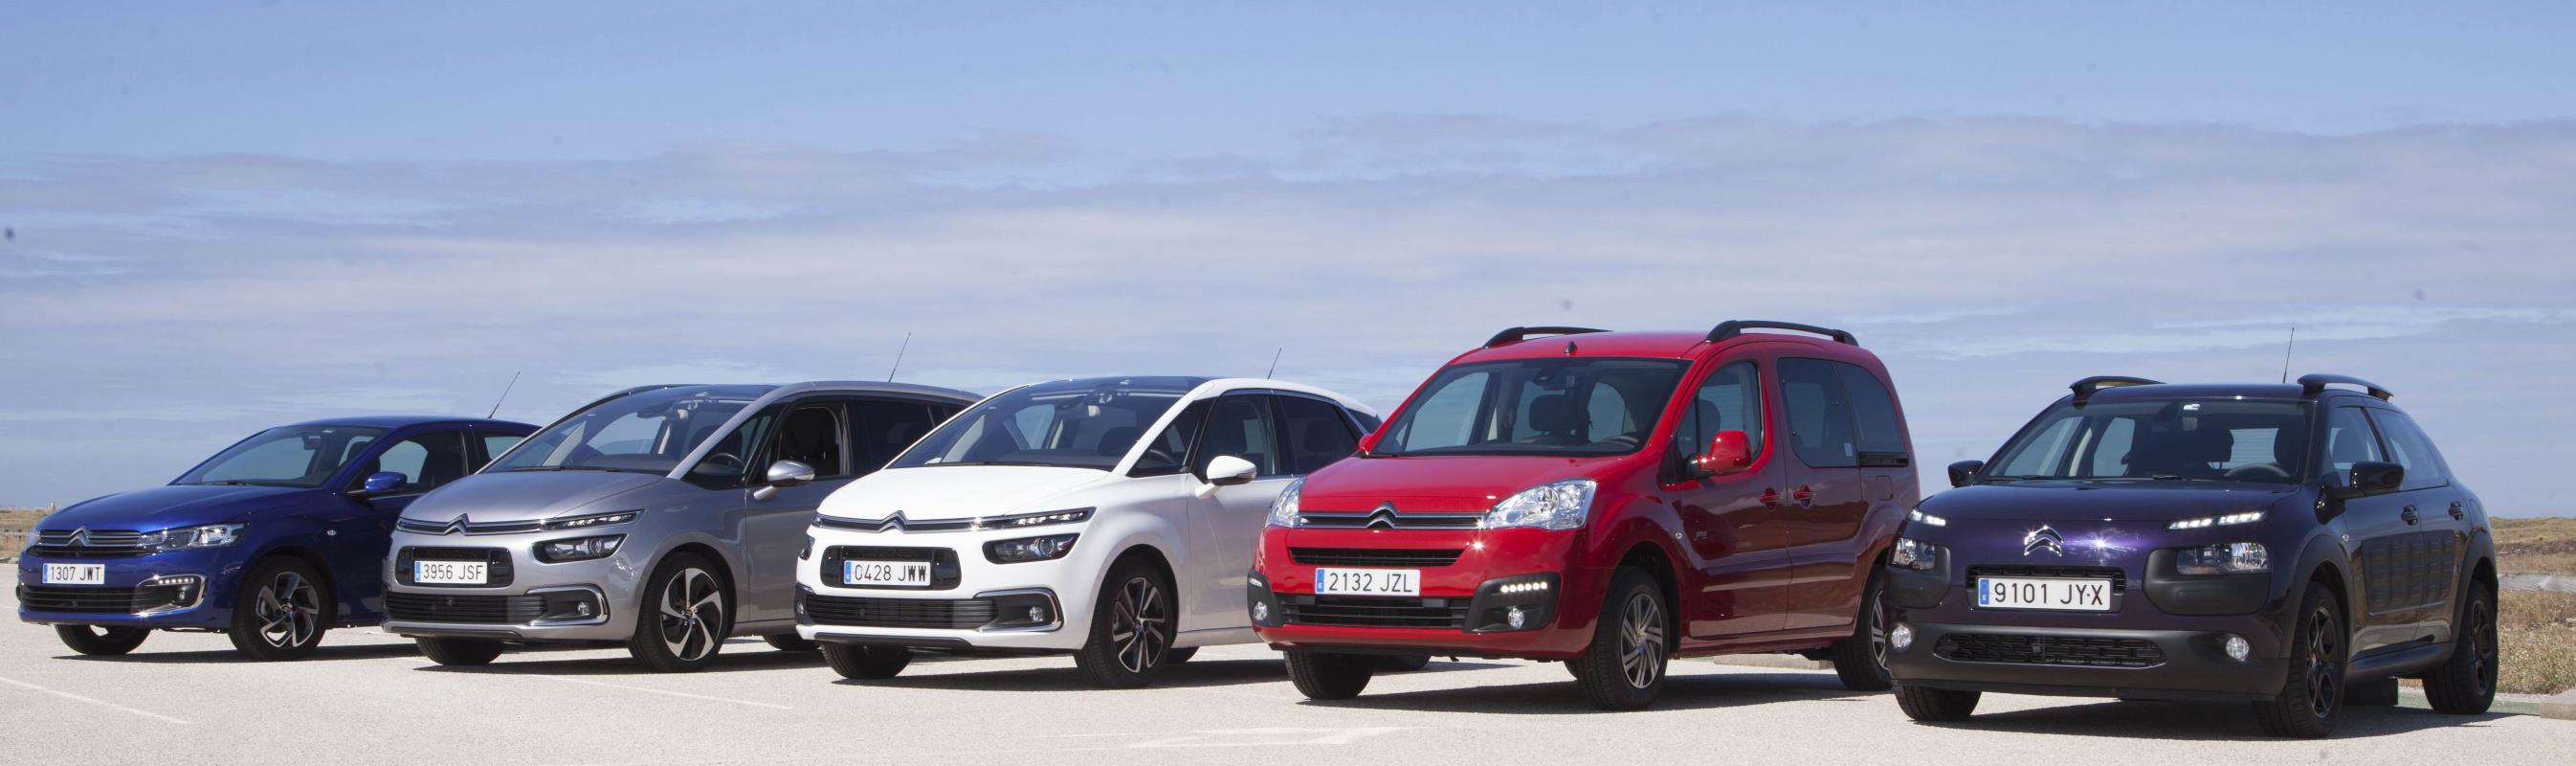 Citroën fabrica modelos 100% Made in Spain